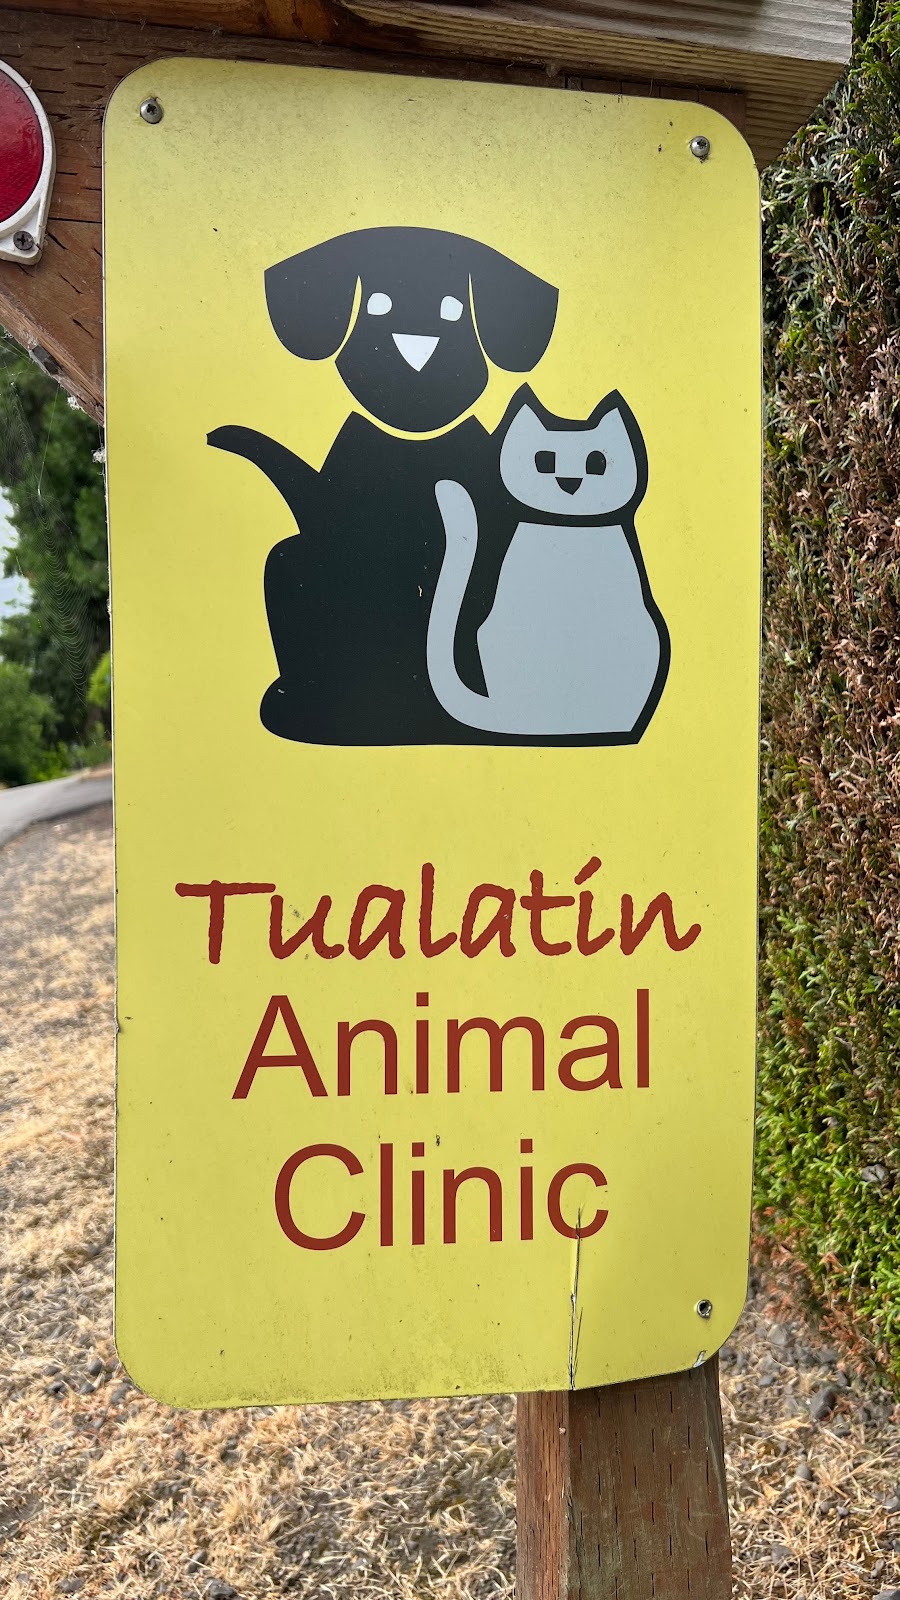 Tualatin Animal Clinic | 8700 SW Cherokee St, Tualatin, OR 97062, USA | Phone: (503) 692-3340